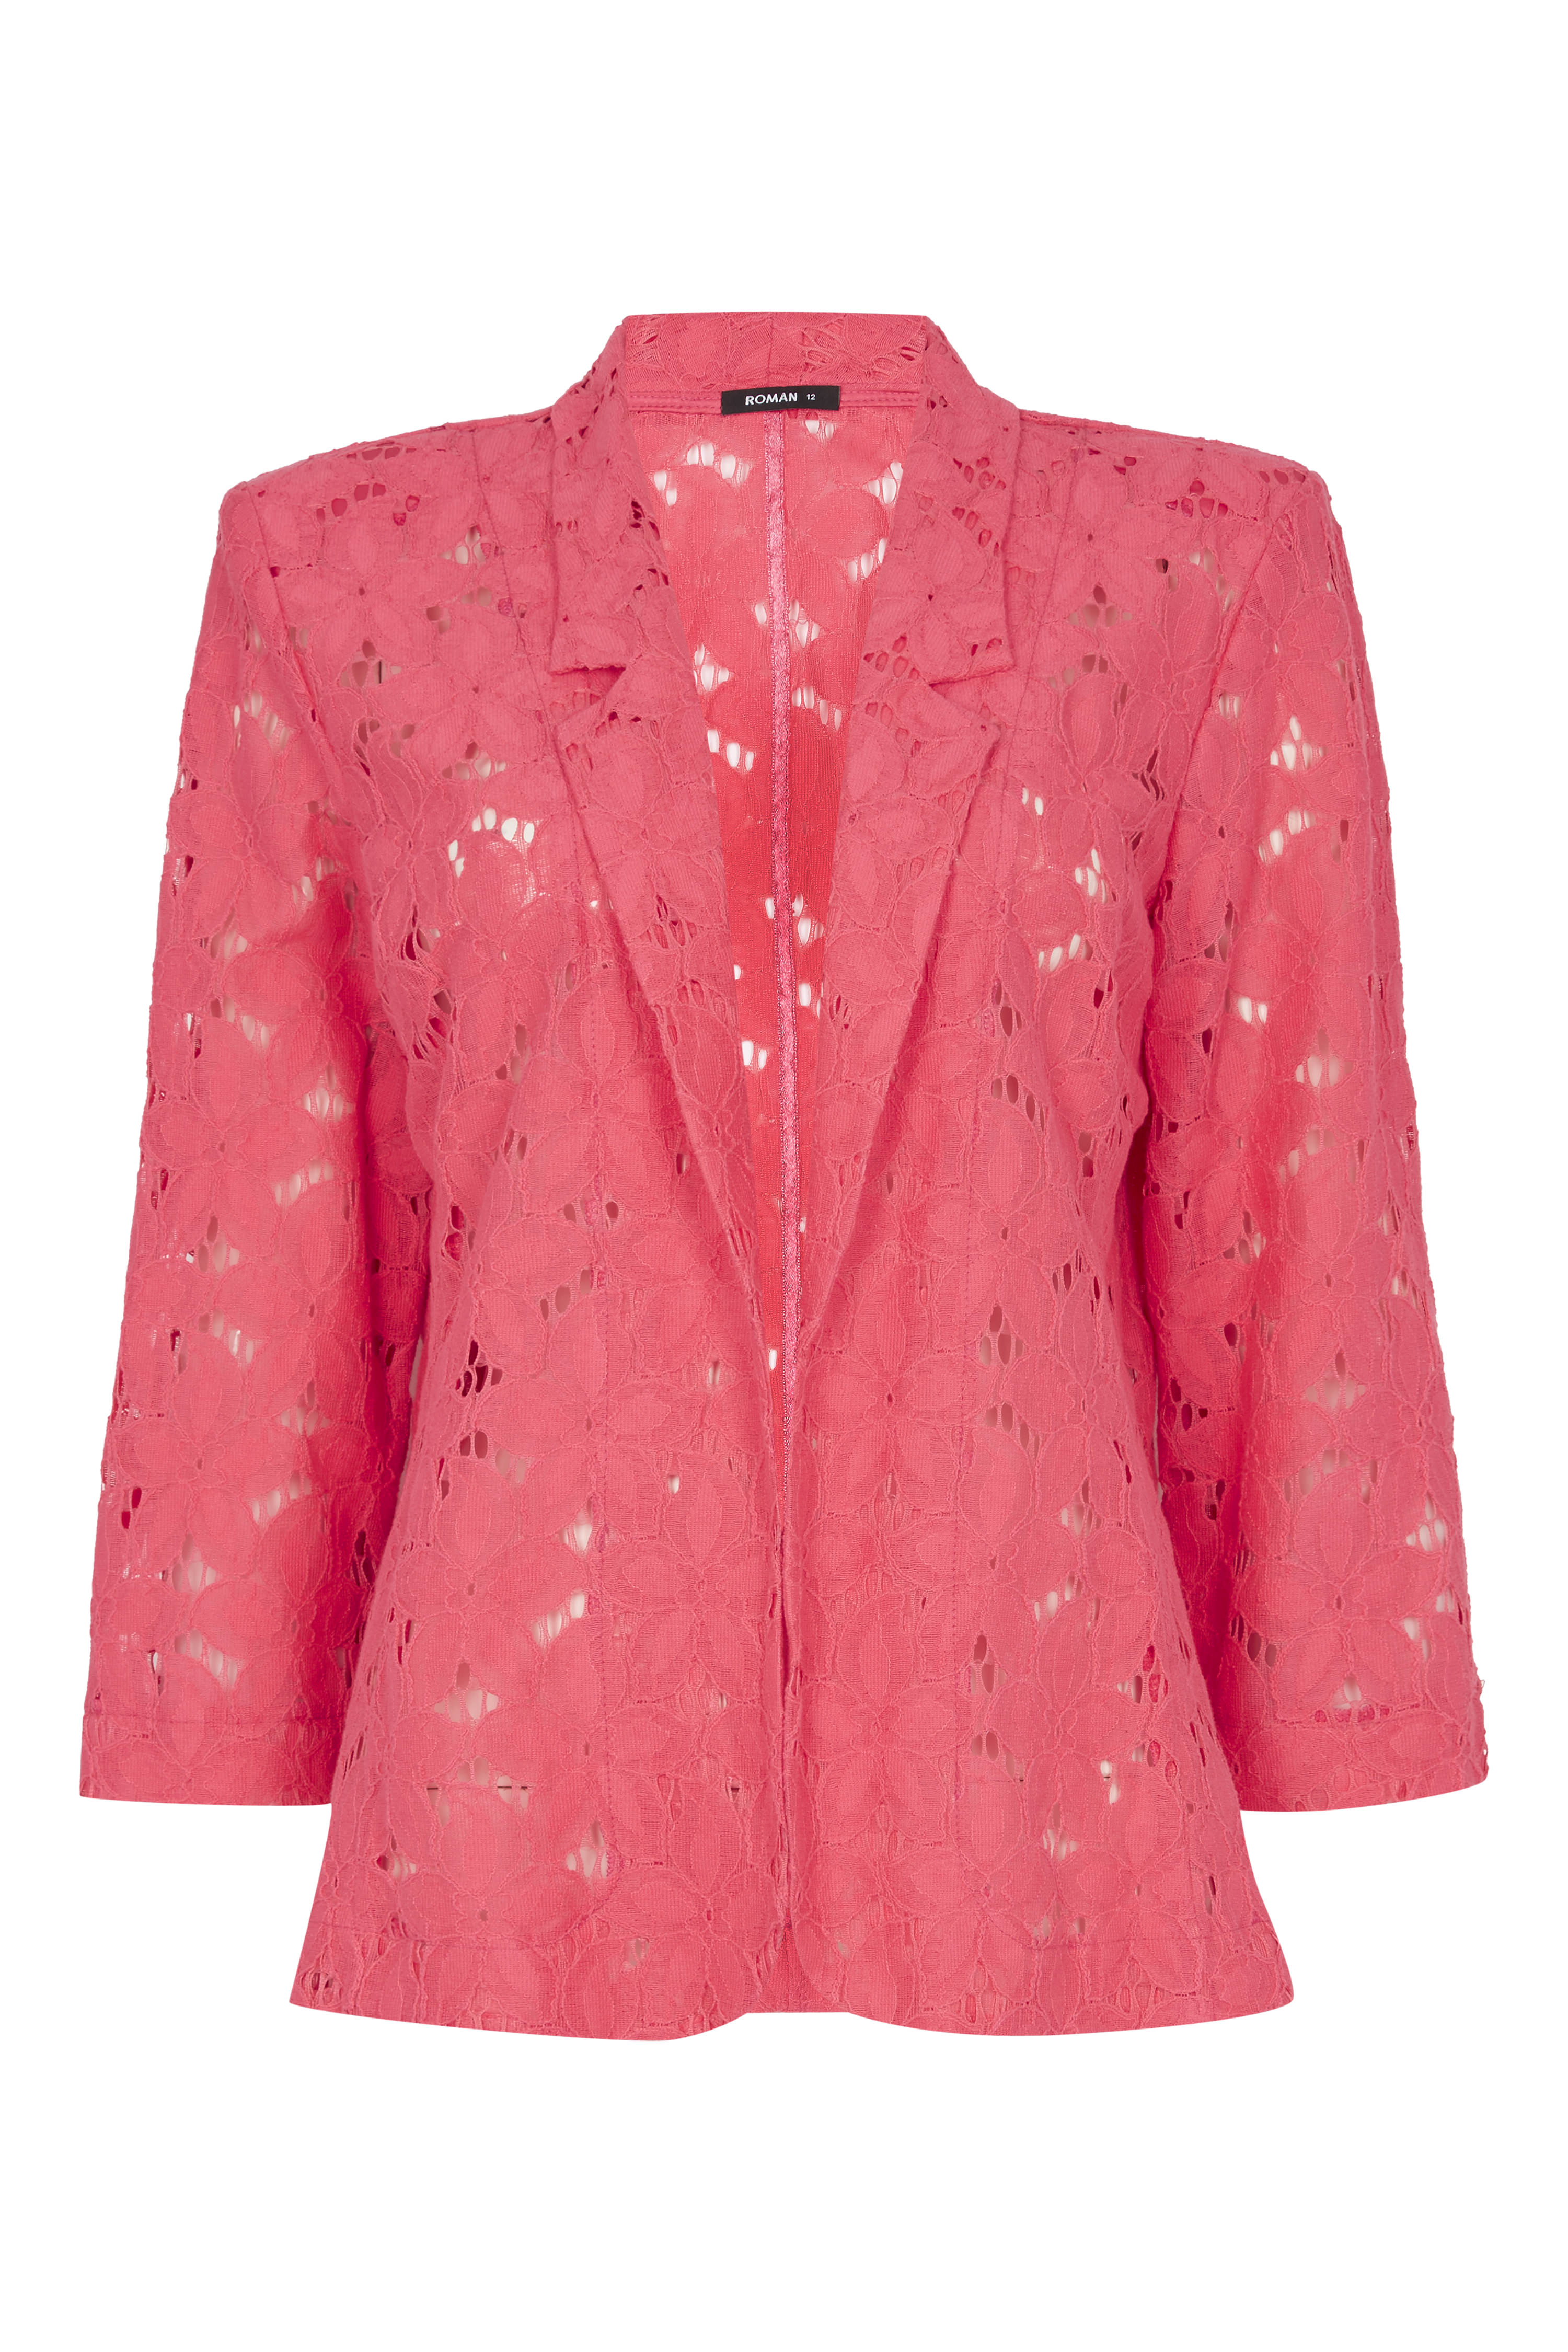 Lace Jacket in Pink - Roman Originals UK